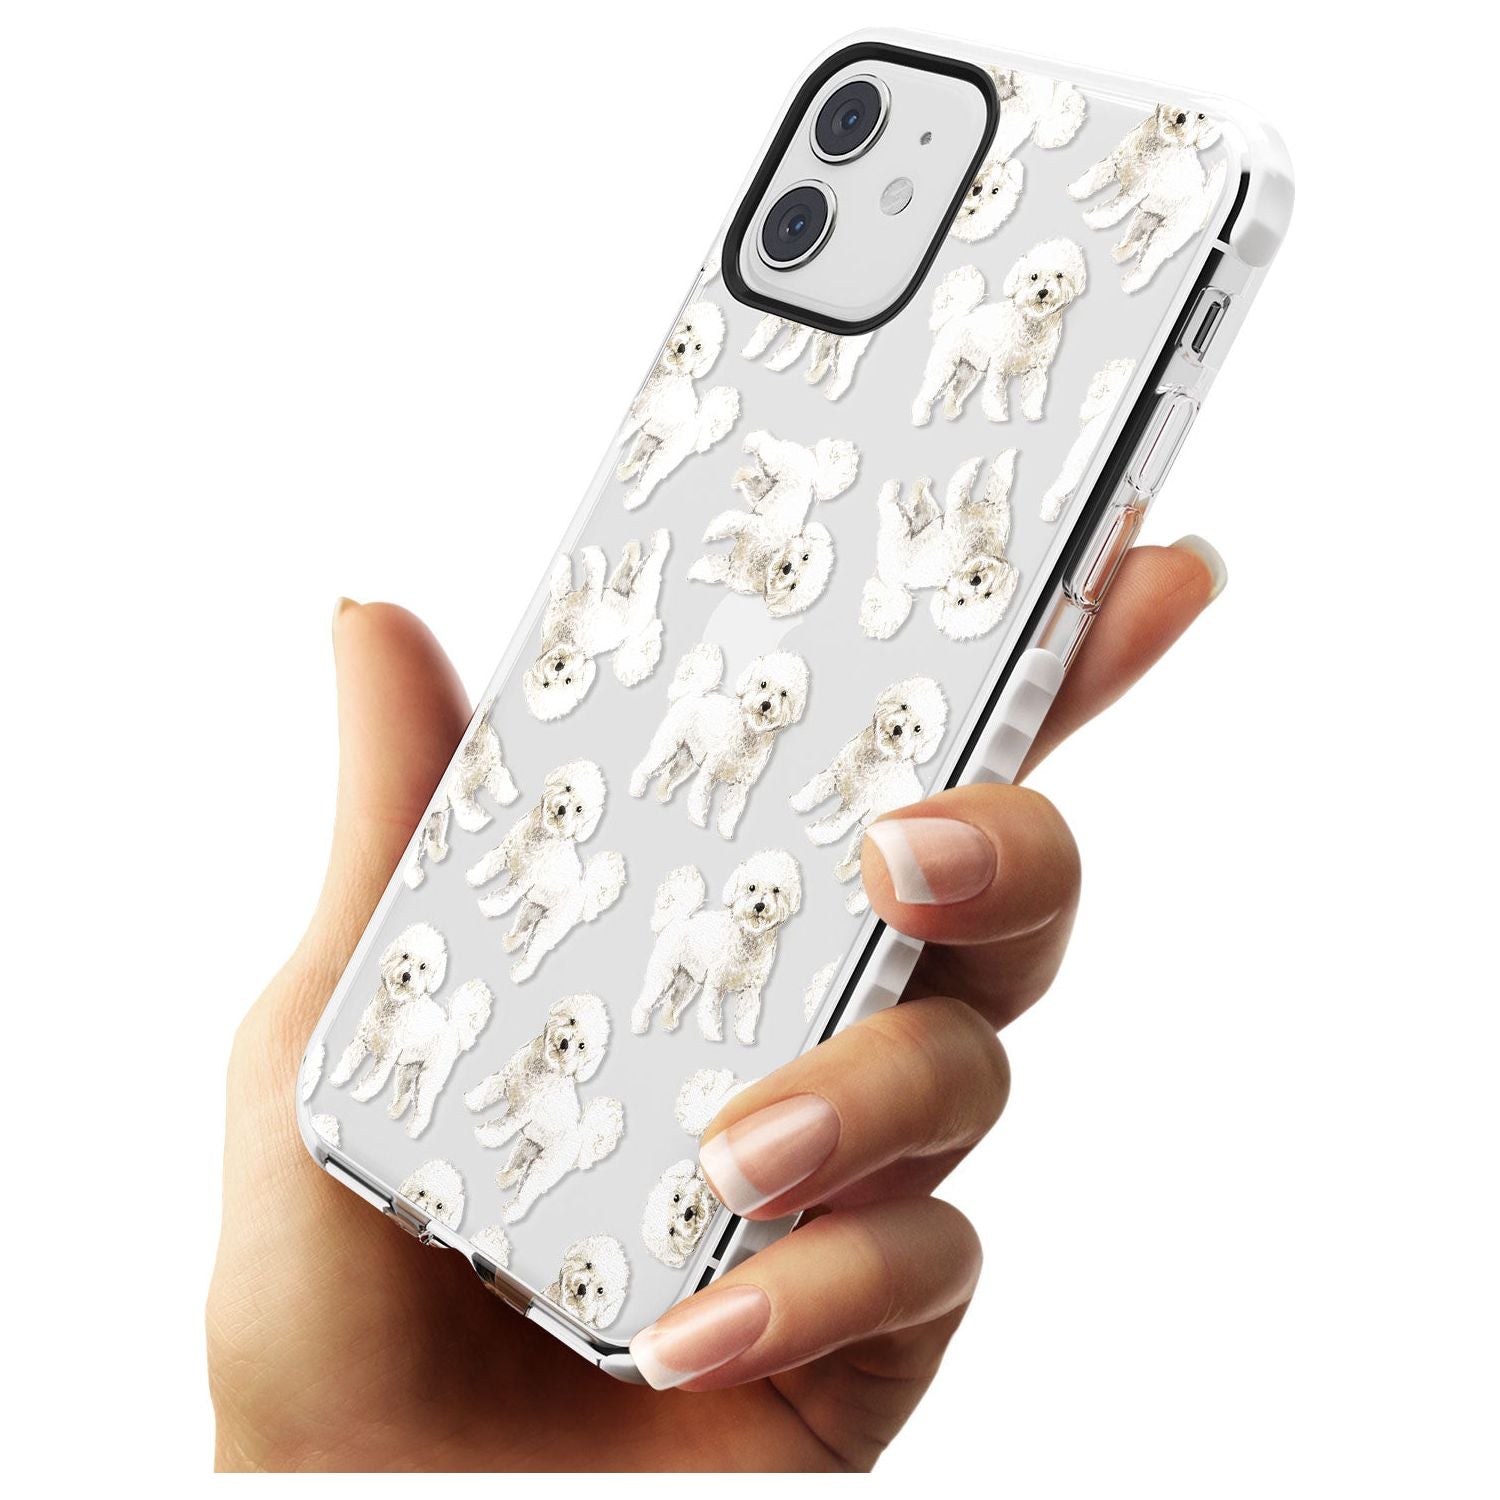 Bichon Frise Watercolour Dog Pattern Impact Phone Case for iPhone 11